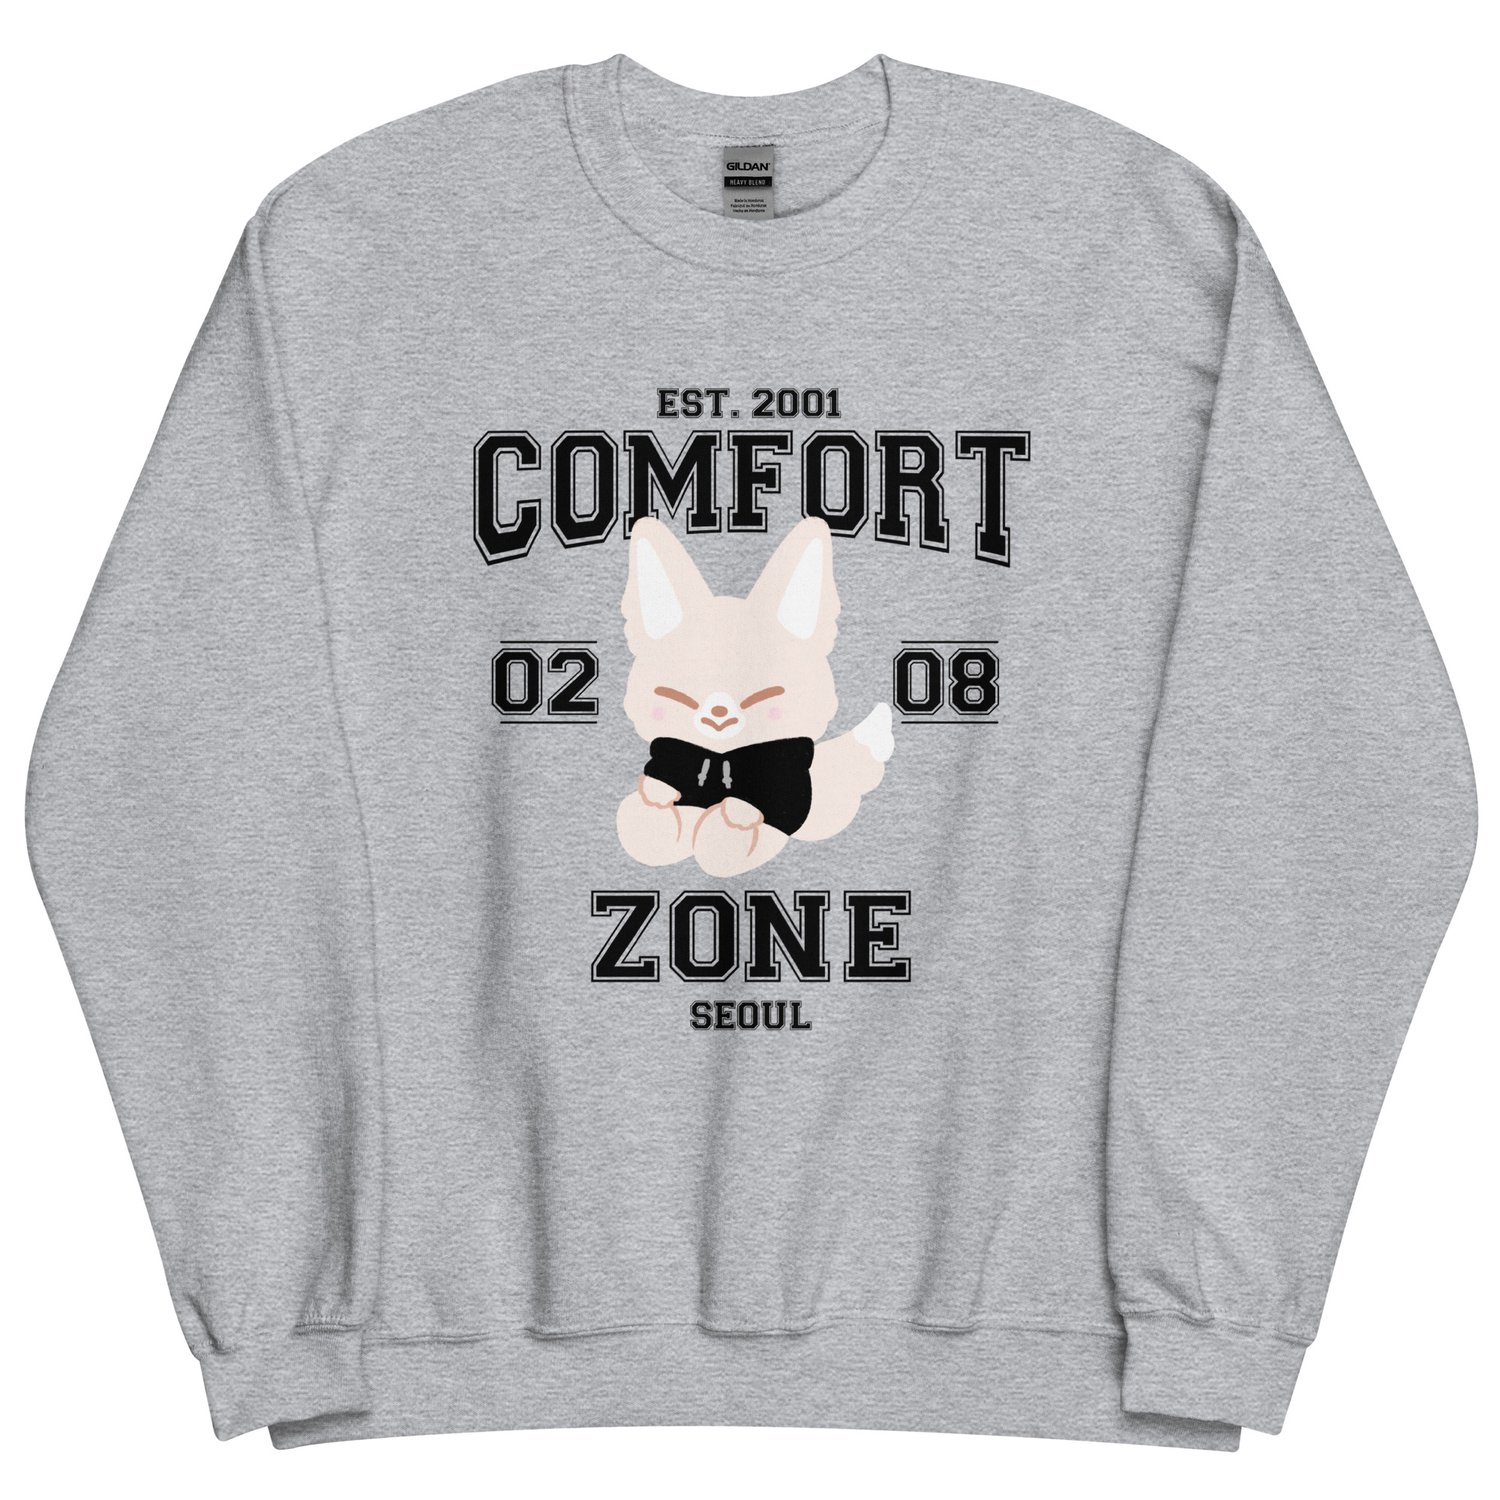 Image of 0208 comfort zone sweatshirt